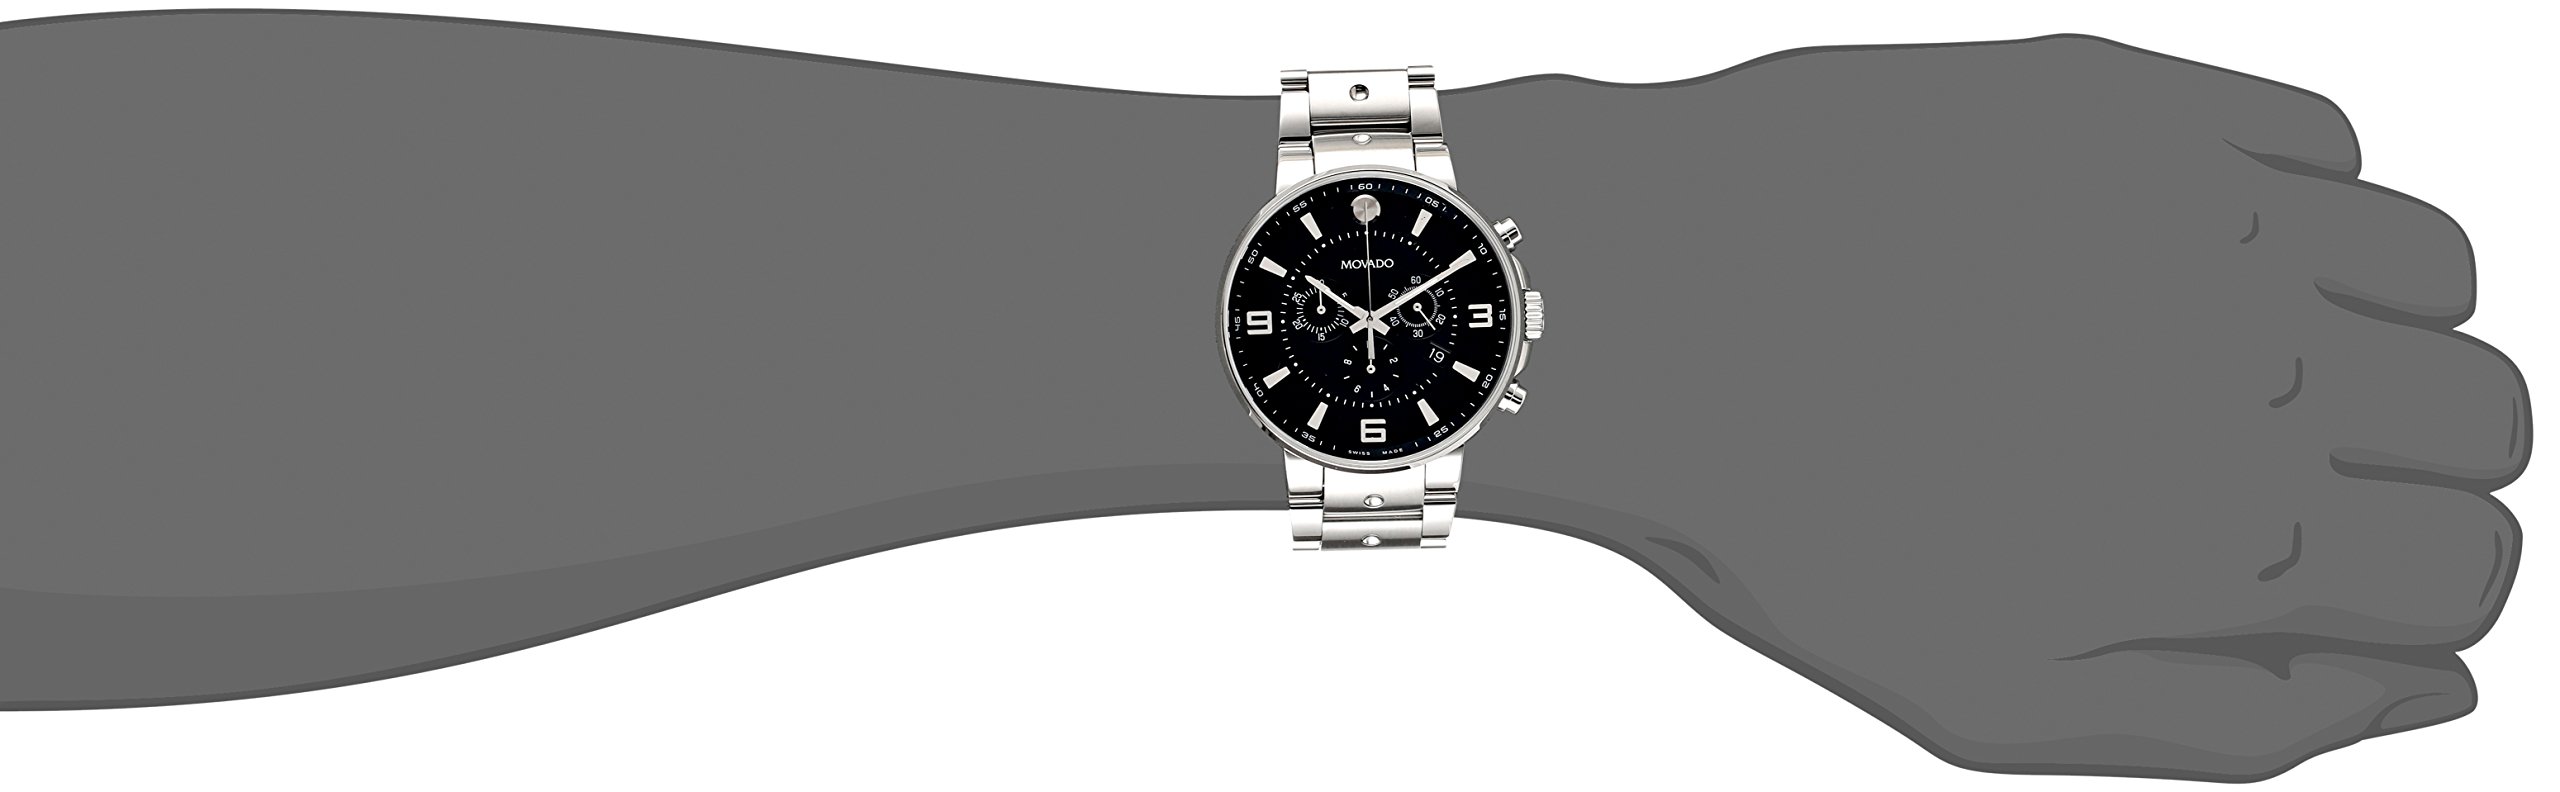 Movado Men's 0606759 SE. Pilot Stainless Steel Watch